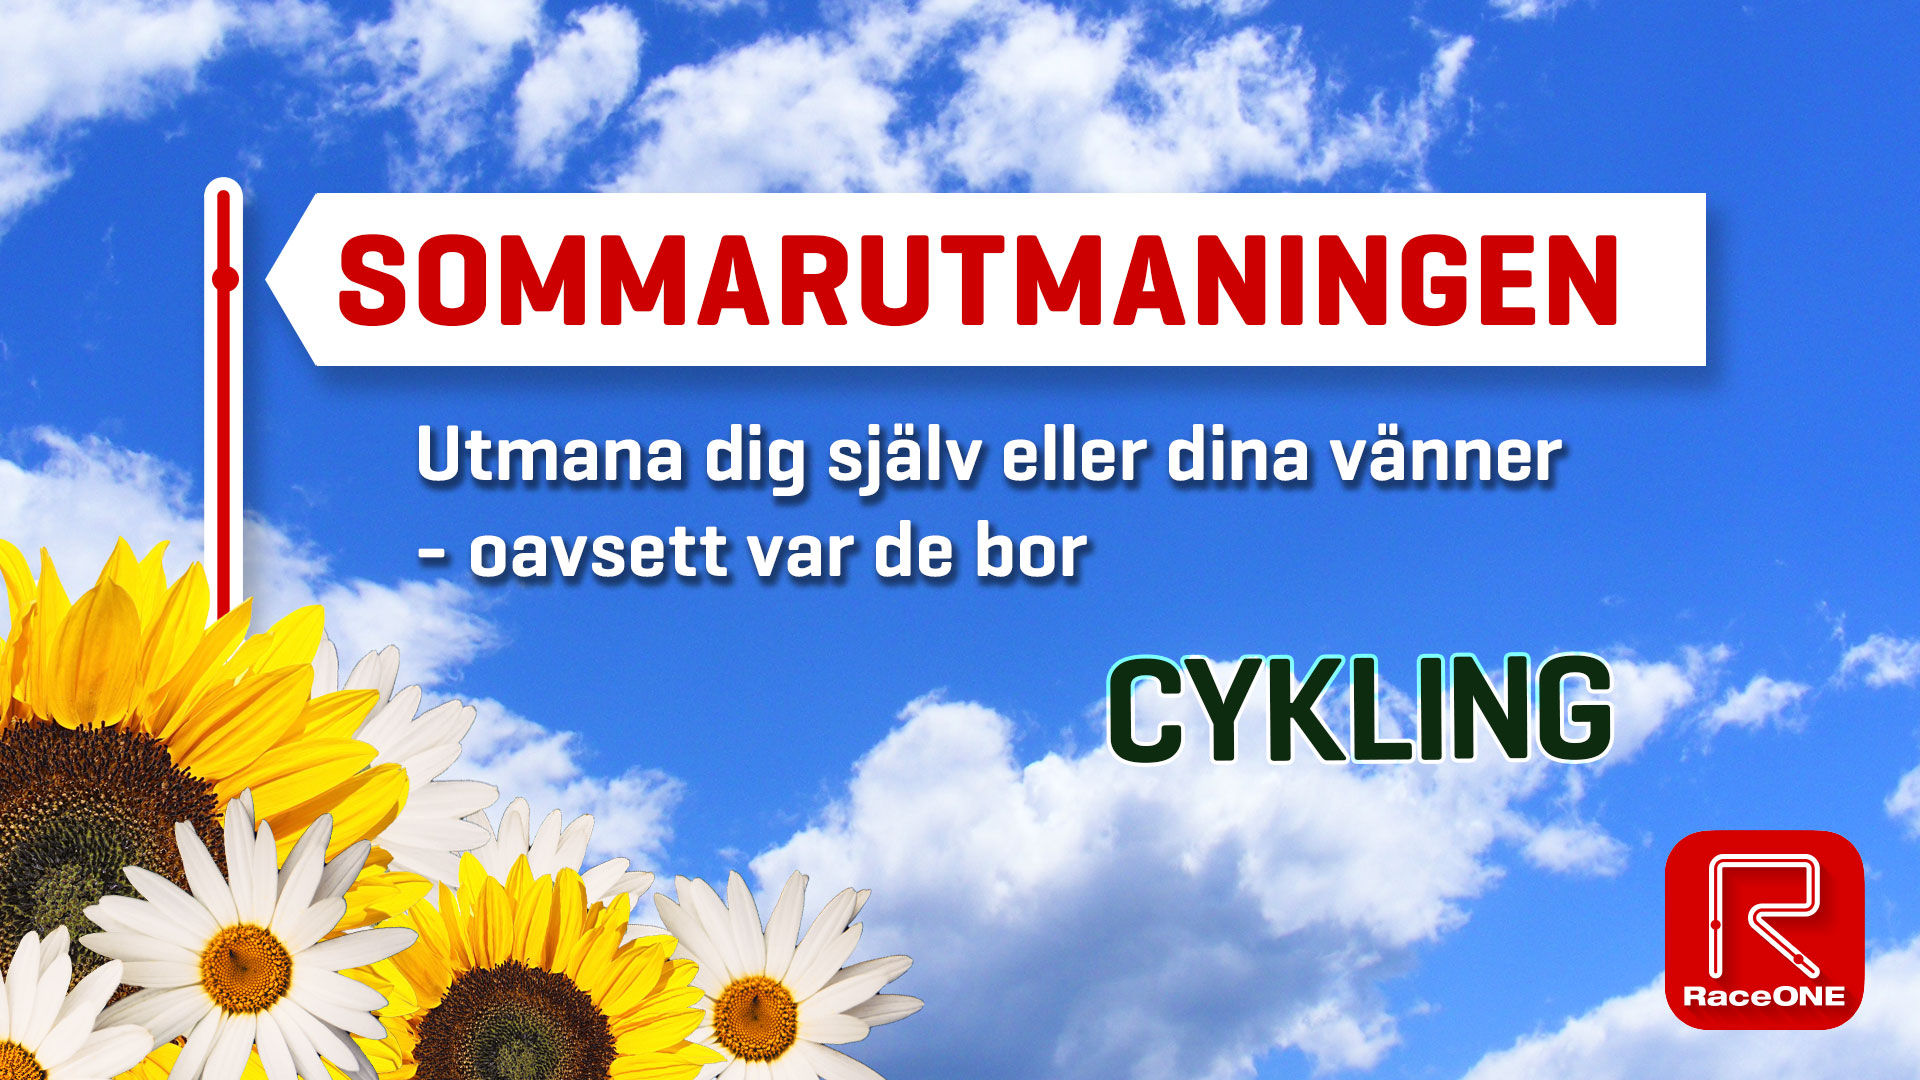 RaceONE Sommarutmaning - Cykling - 2km - Augusti 2020